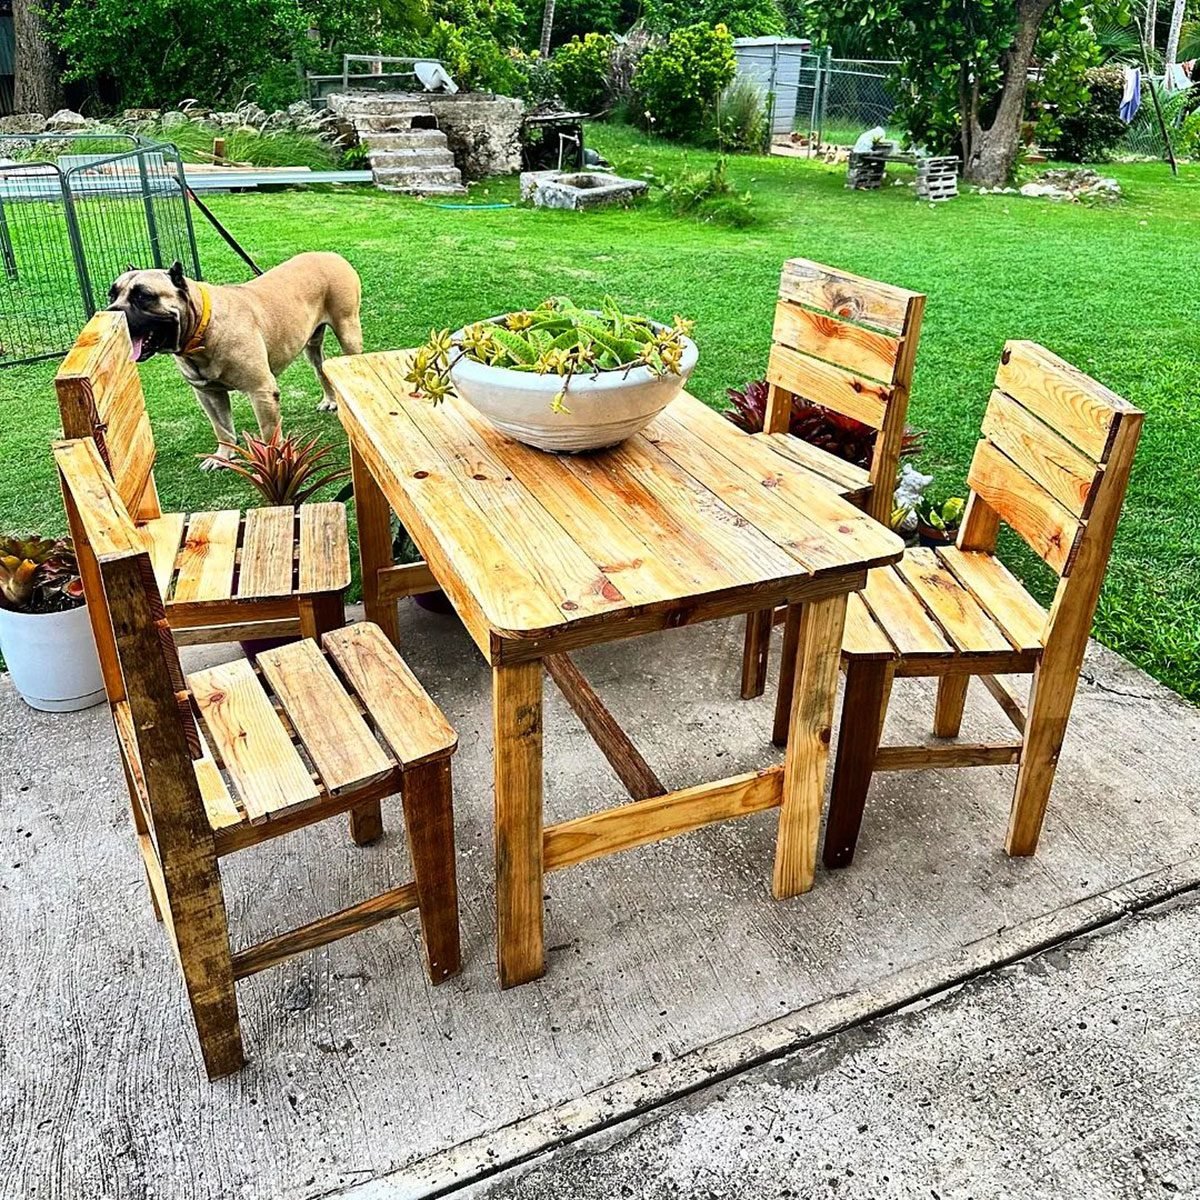 10 Pallet Furniture Ideas Ecomm Via Vals Woodwork Creations Instagram.com  